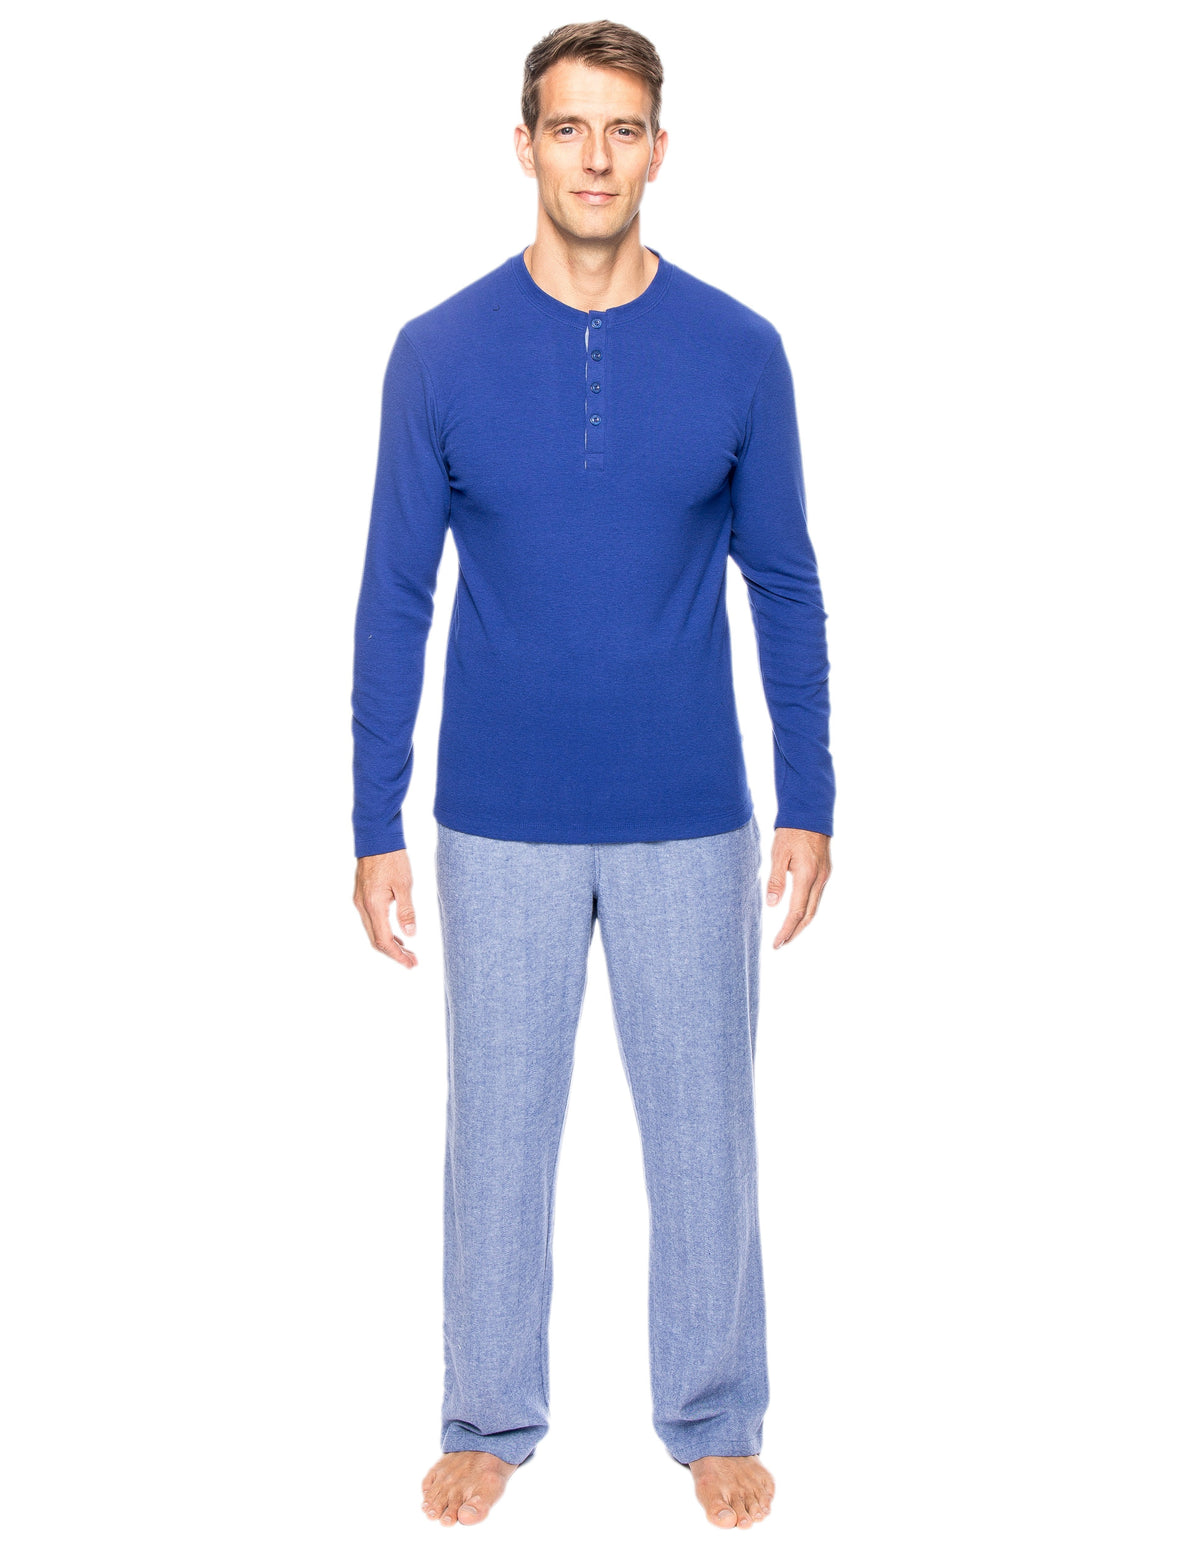 Mens Premium 100% Cotton Flannel Lounge Set - Herringbone Blue